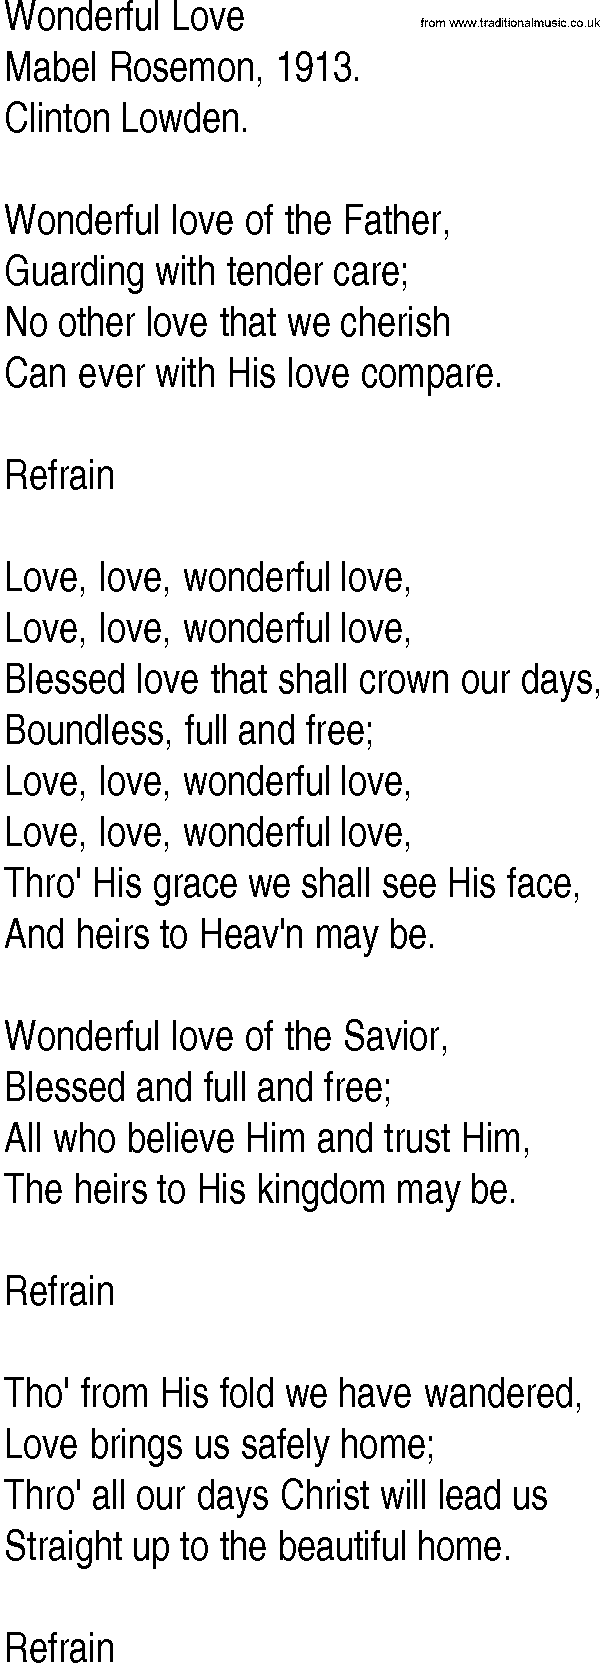 Hymn and Gospel Song: Wonderful Love by Mabel Rosemon lyrics